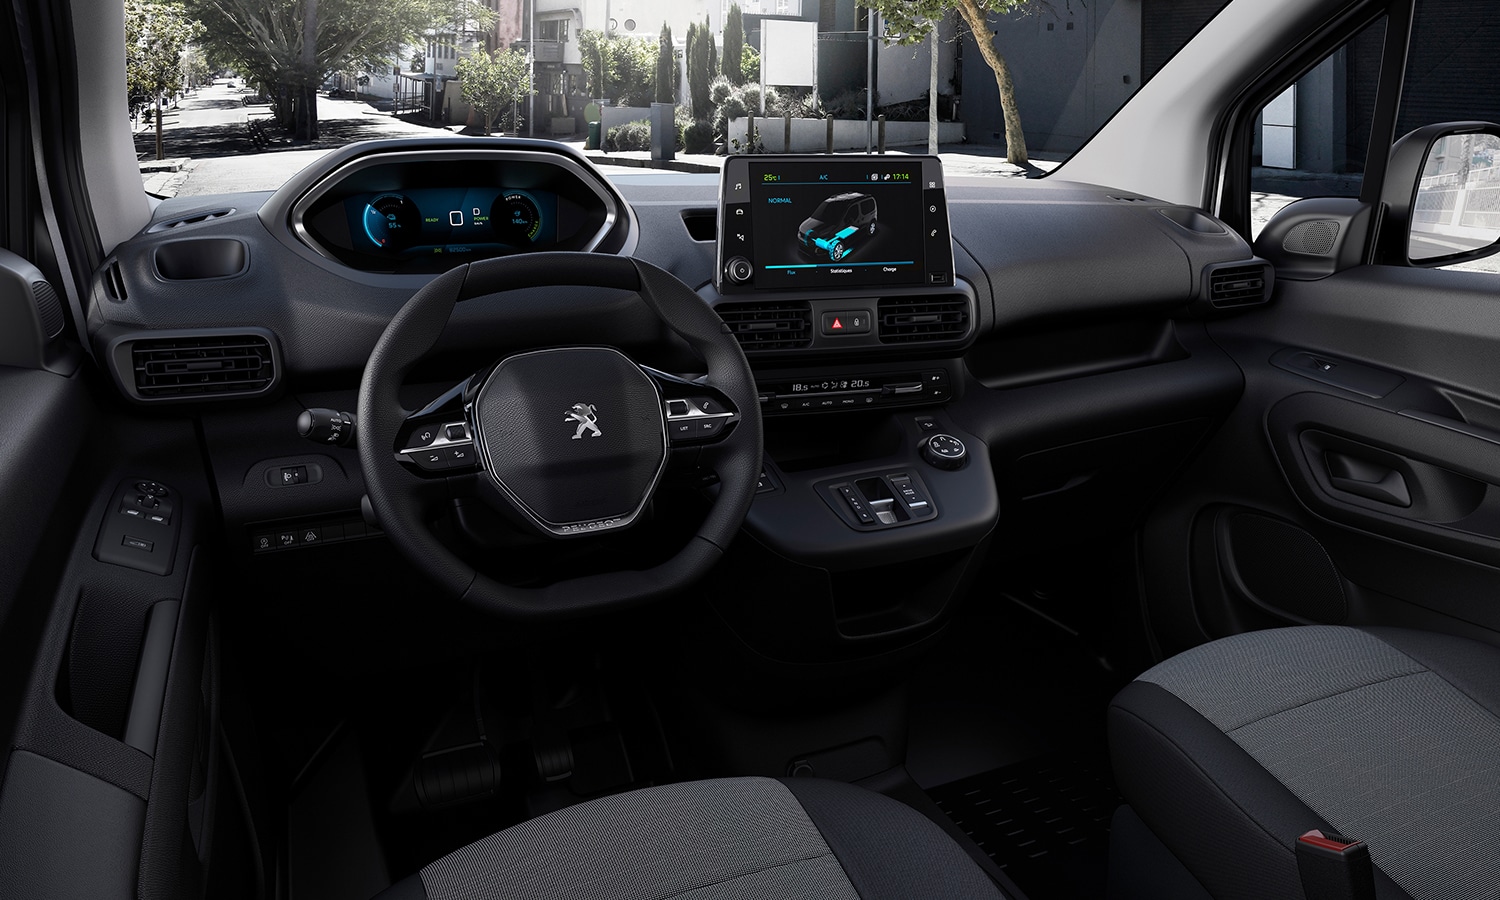 Peugeot e-Partner interior